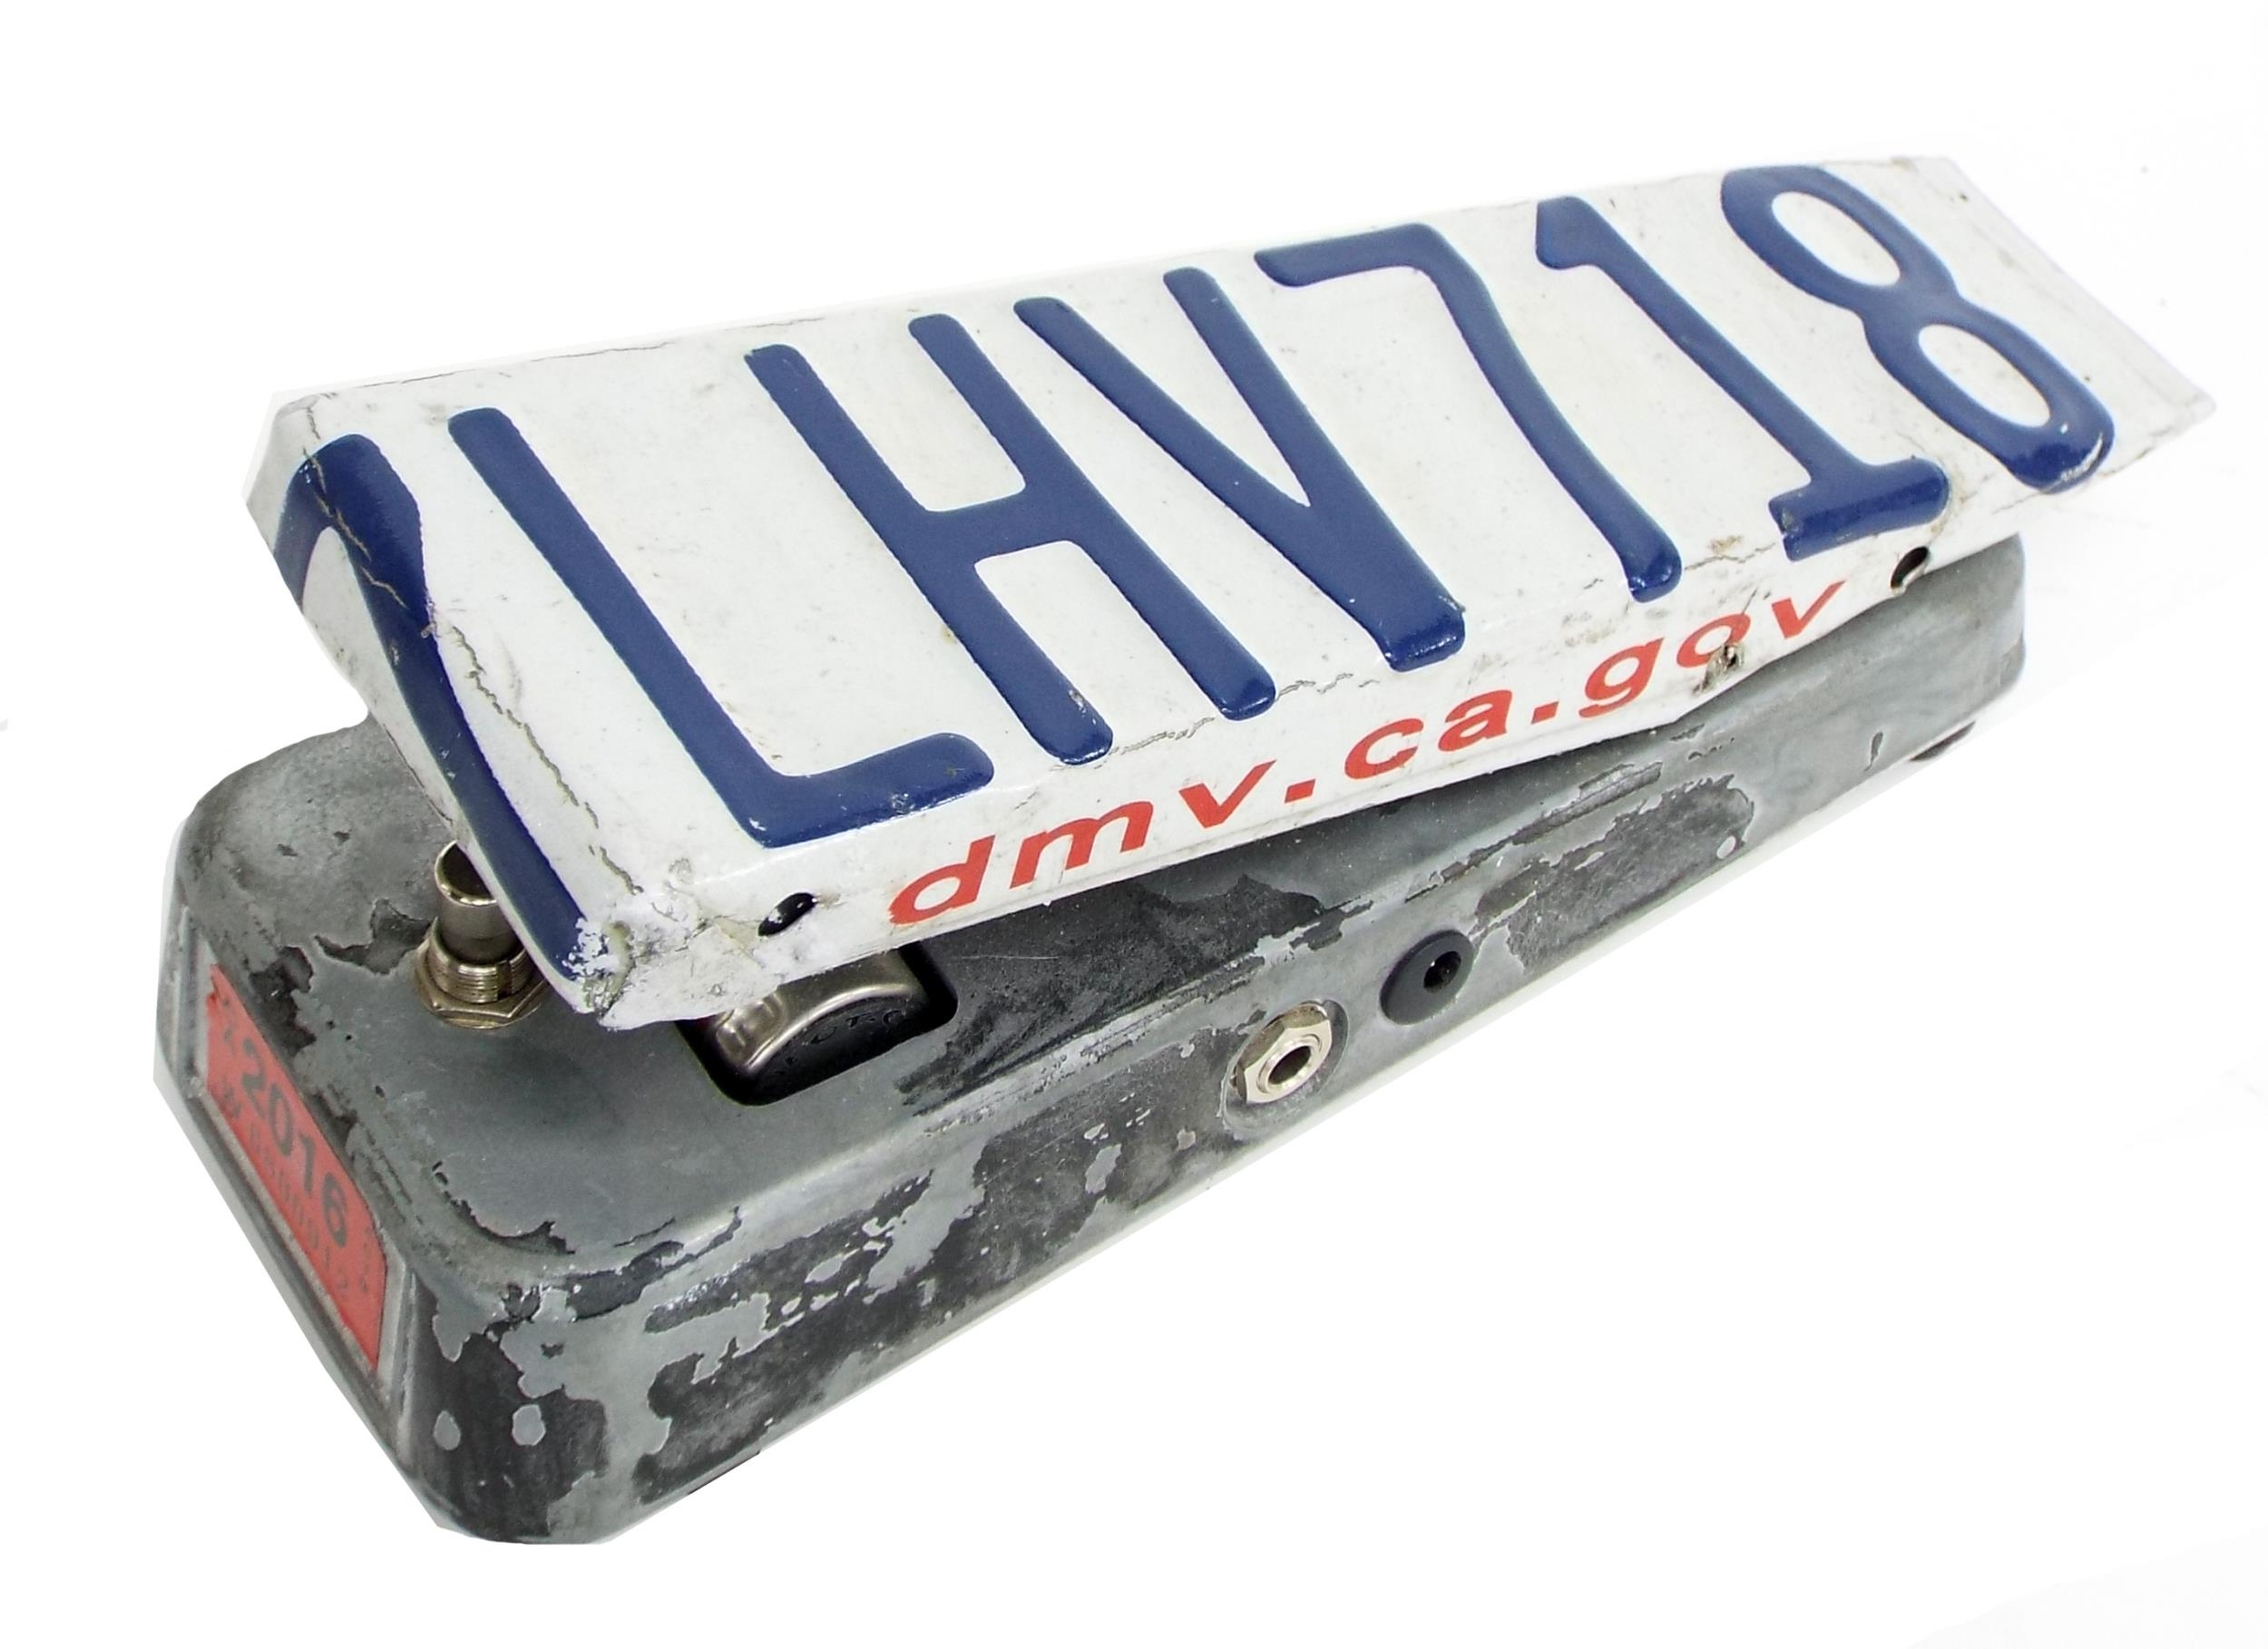 Joe Gagan 'California Licence Plate' model wah wah guitar pedal